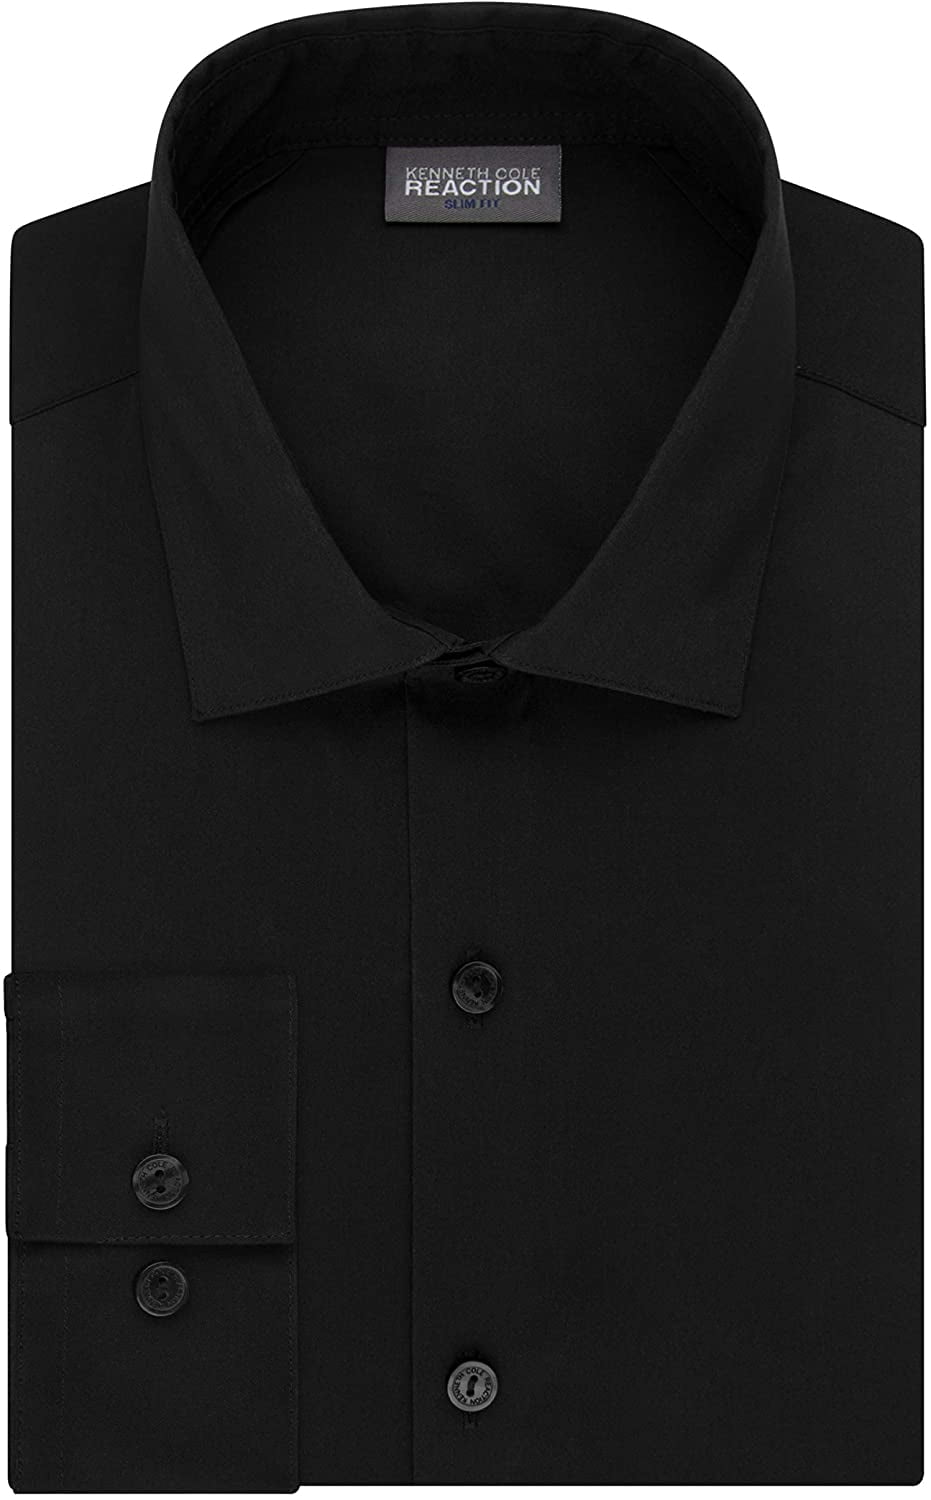 black spread collar dress shirt